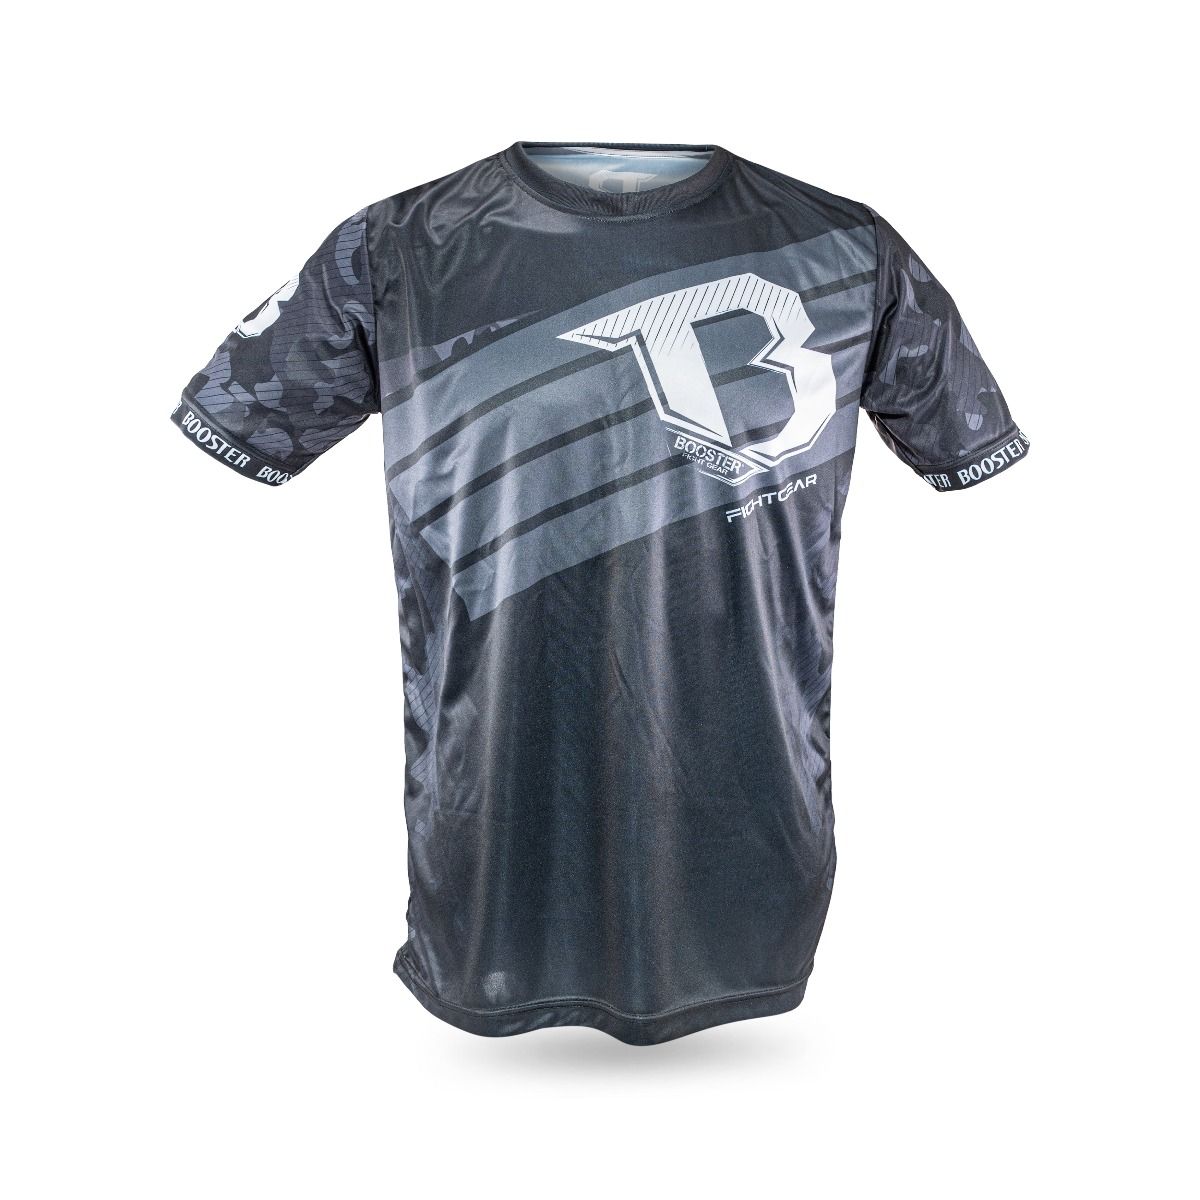 Booster B force t shirt 2